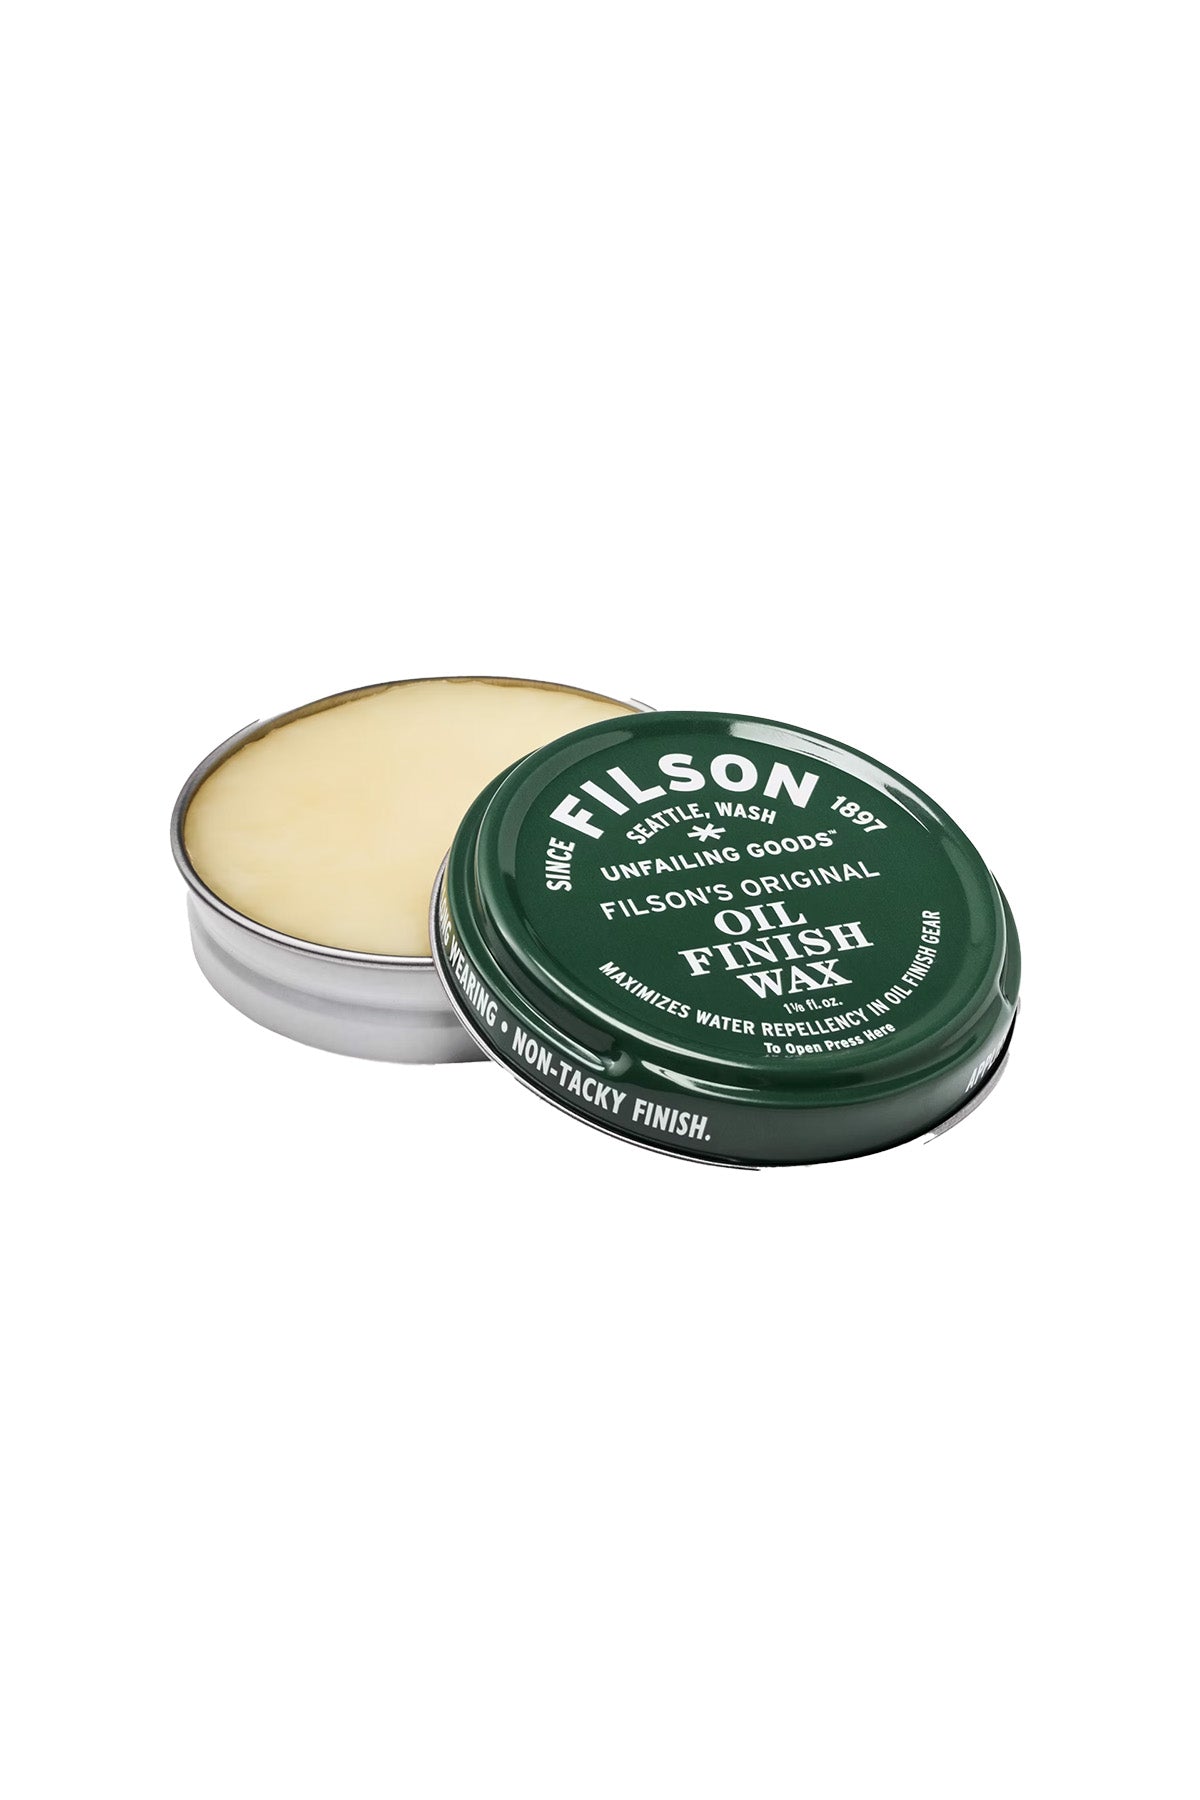 Filson - Oil Finish Wax - Inside